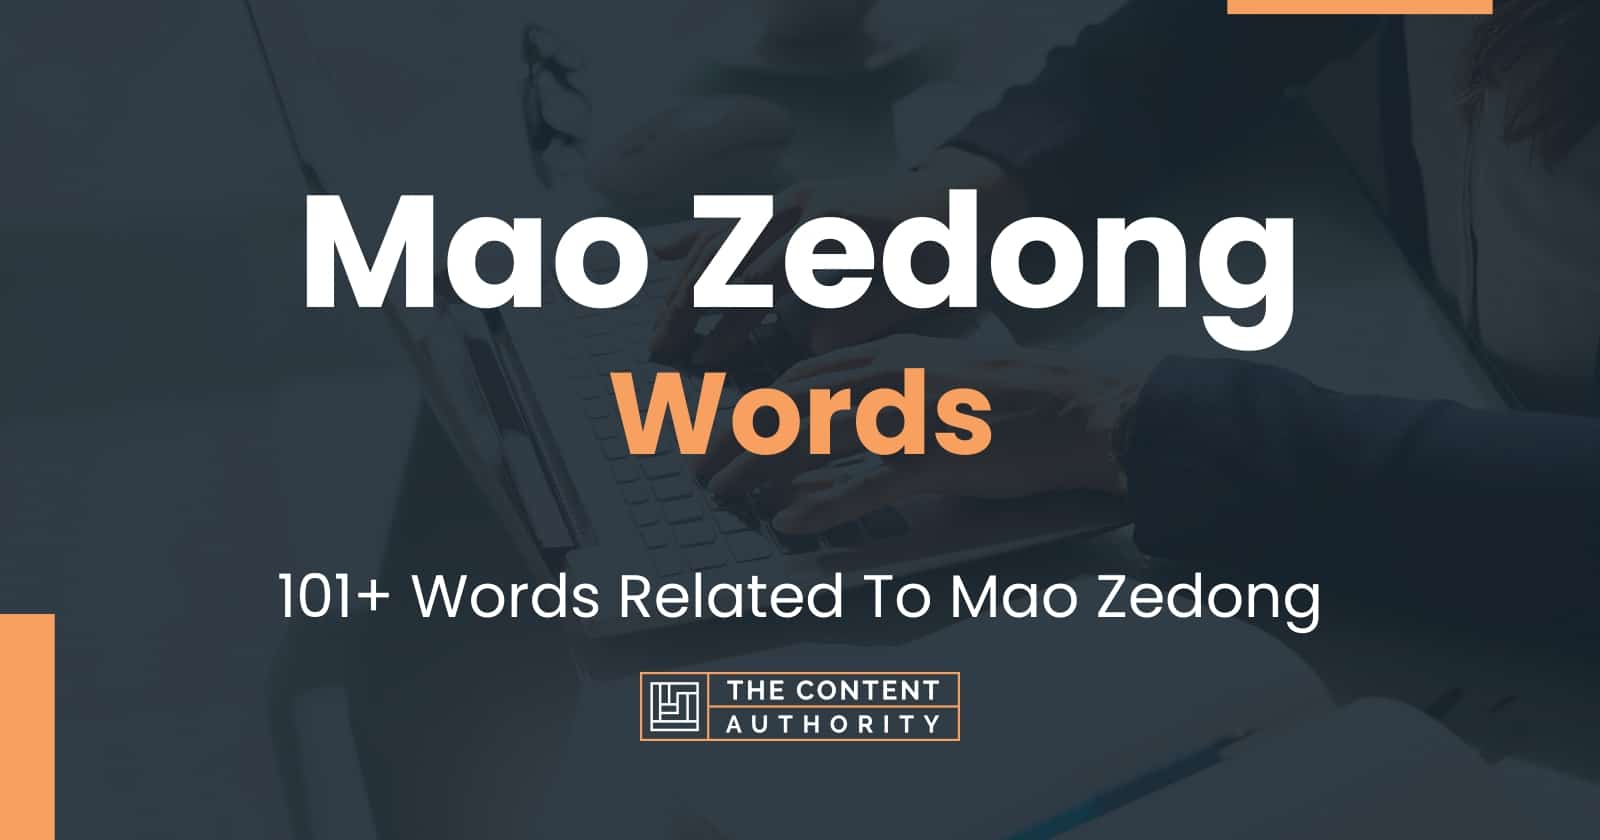 Mao Zedong Words - 101+ Words Related To Mao Zedong